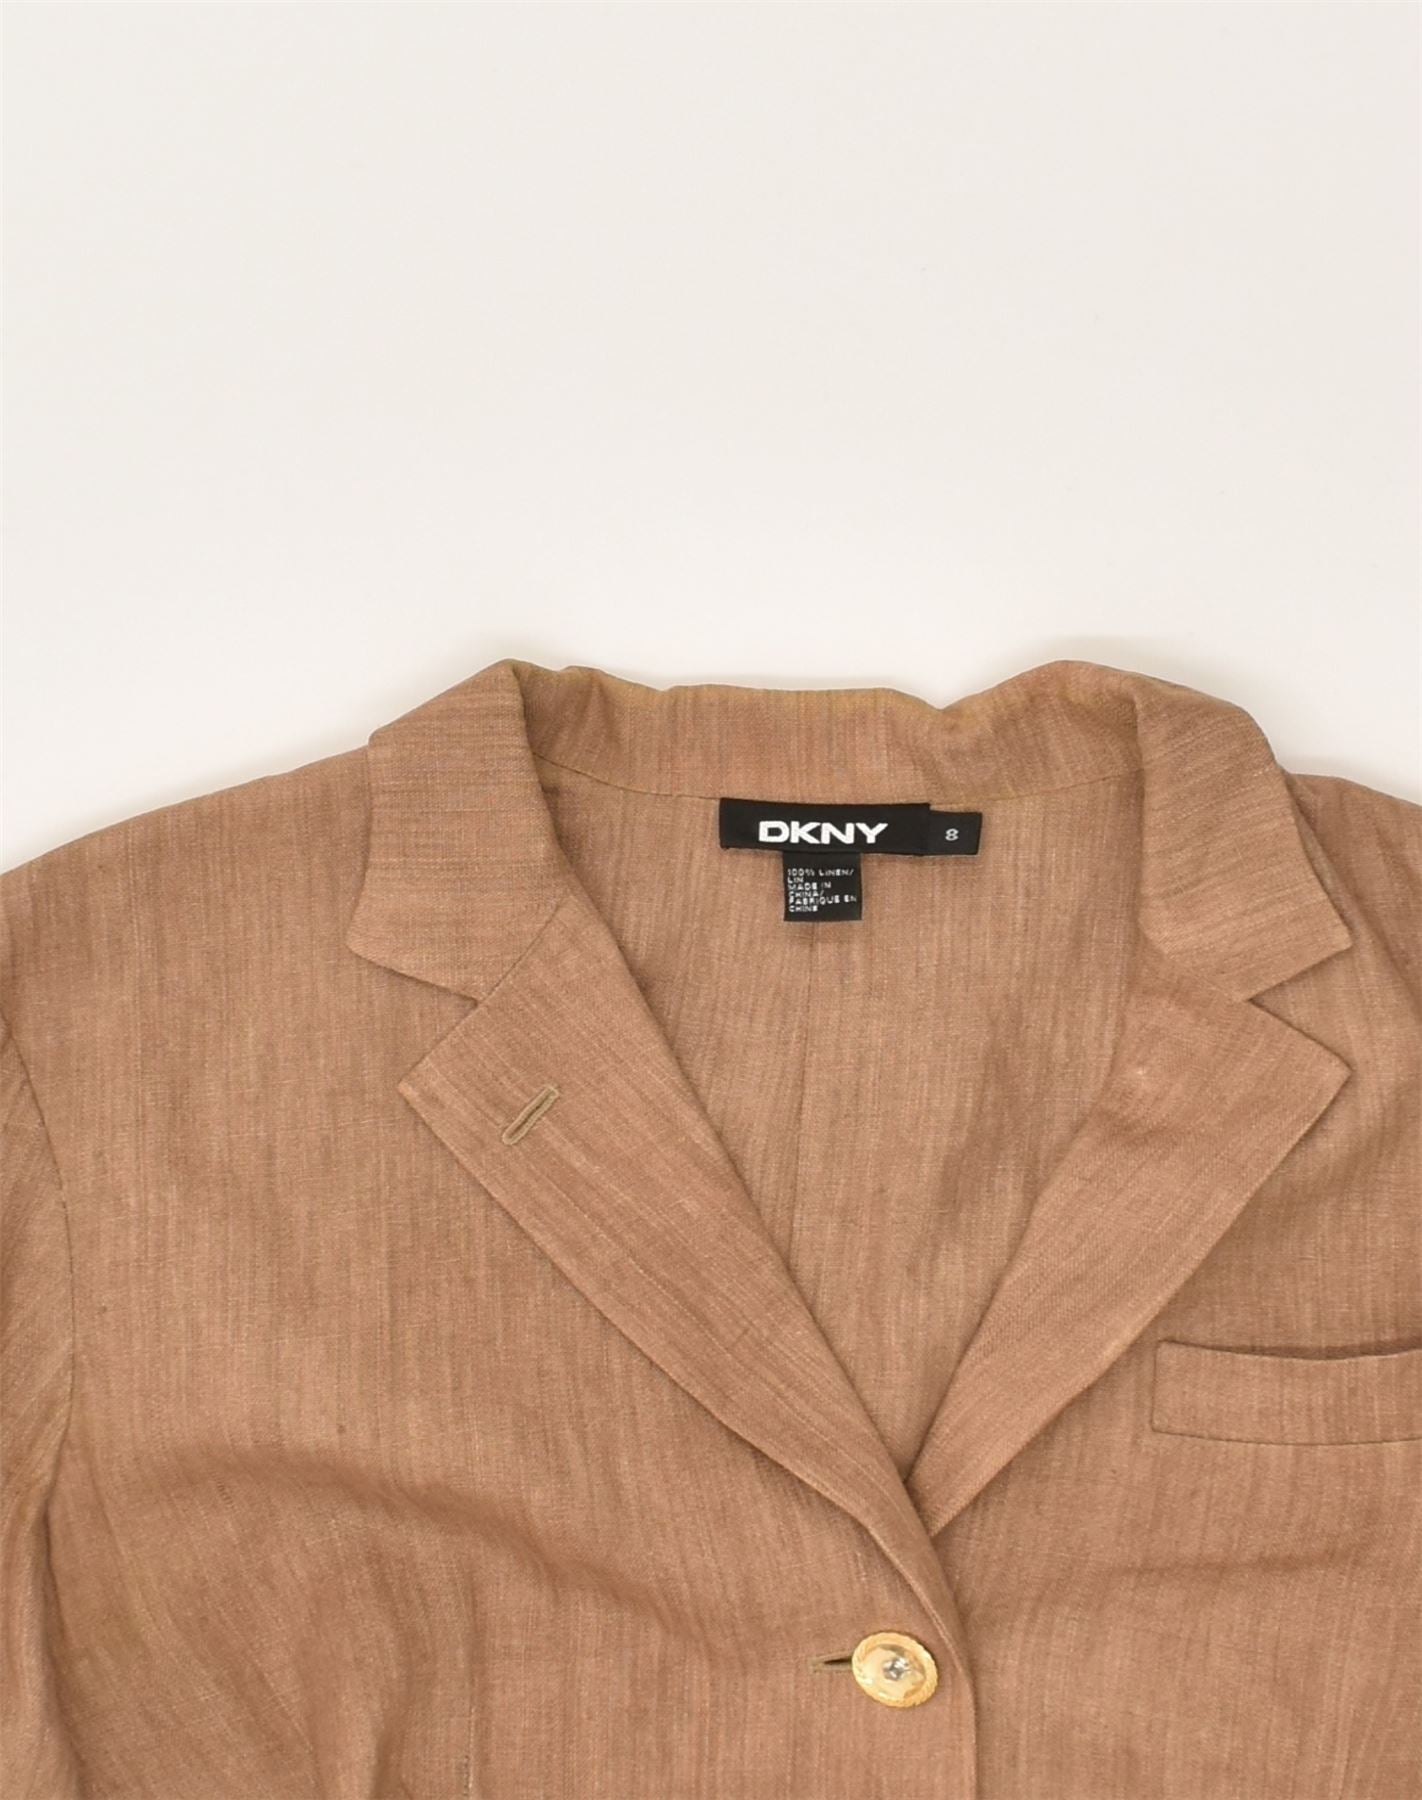 DKNY Womens 3 Button Blazer Jacket US 8 Medium Brown Flax